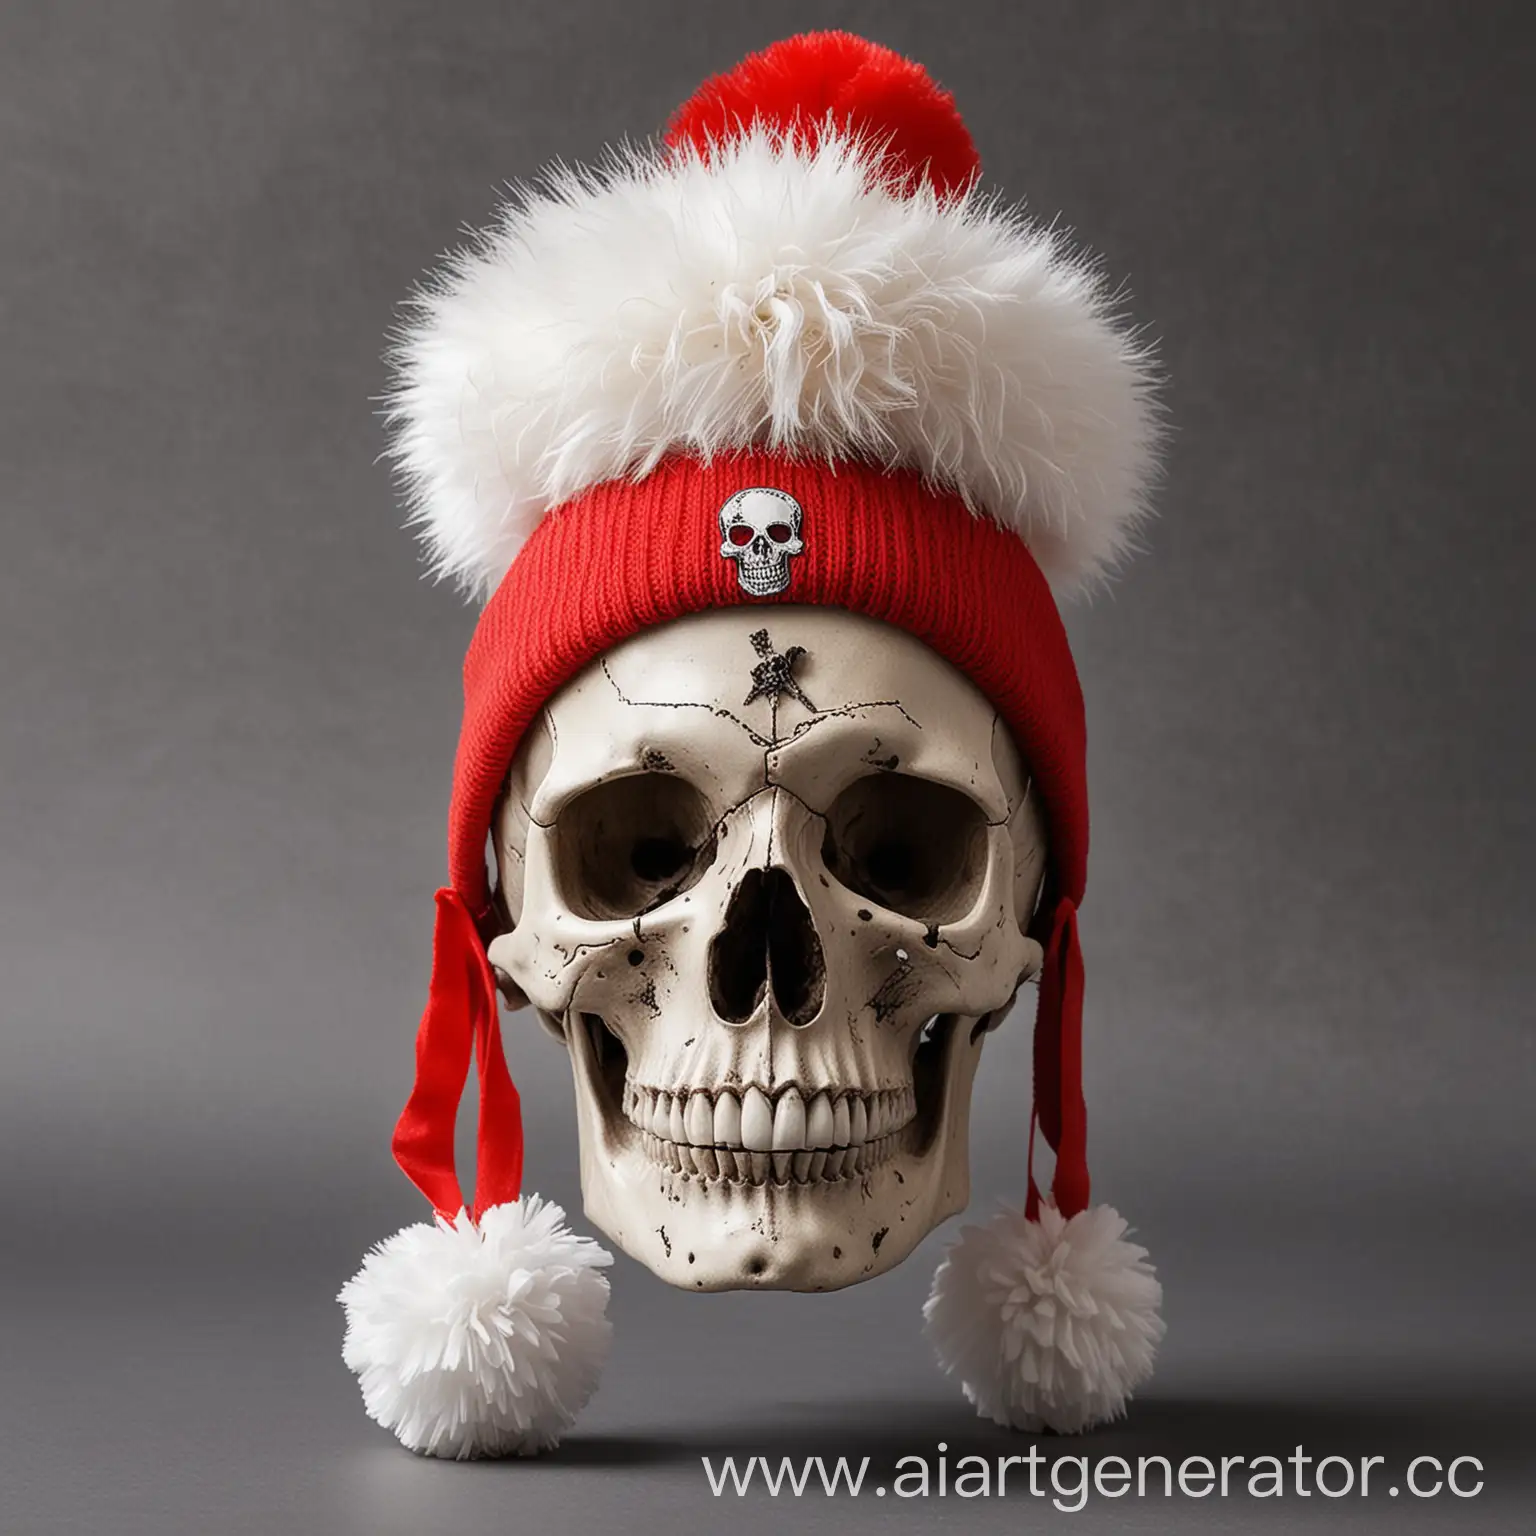 Skull-with-Red-Hat-and-White-Pompon-Festive-Skeleton-Artwork